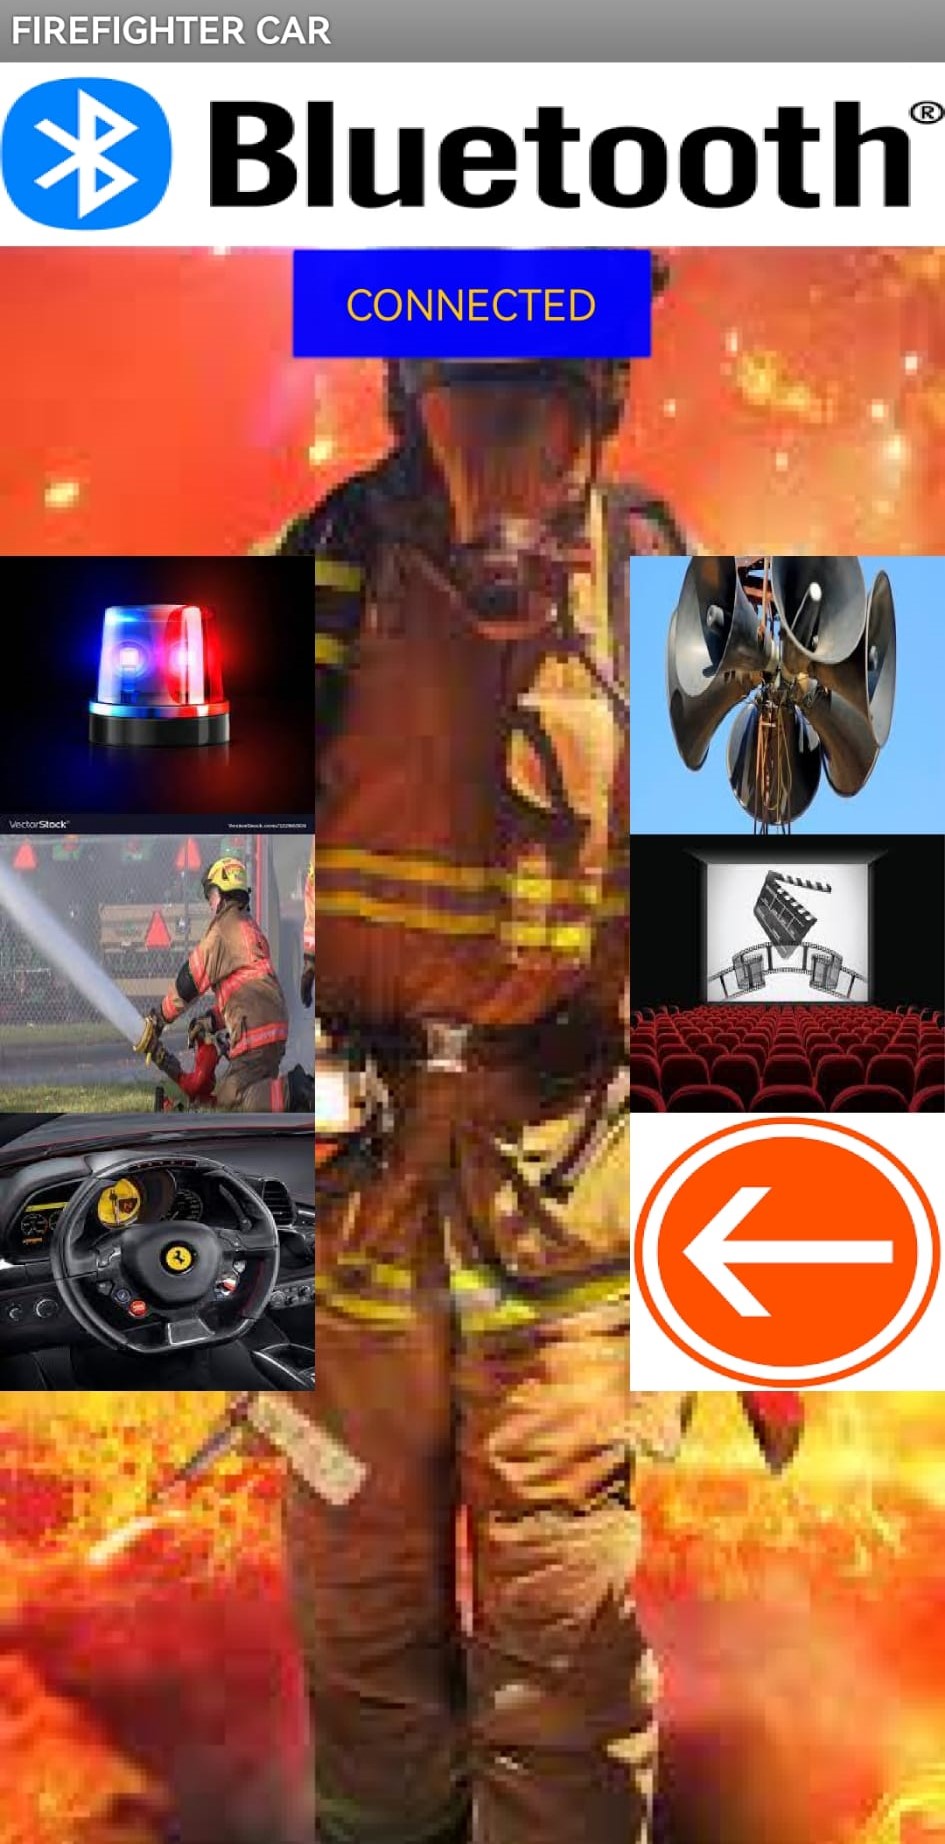 pm:prj2023:ndrogeanu:app_4_firefighter_car.jpeg